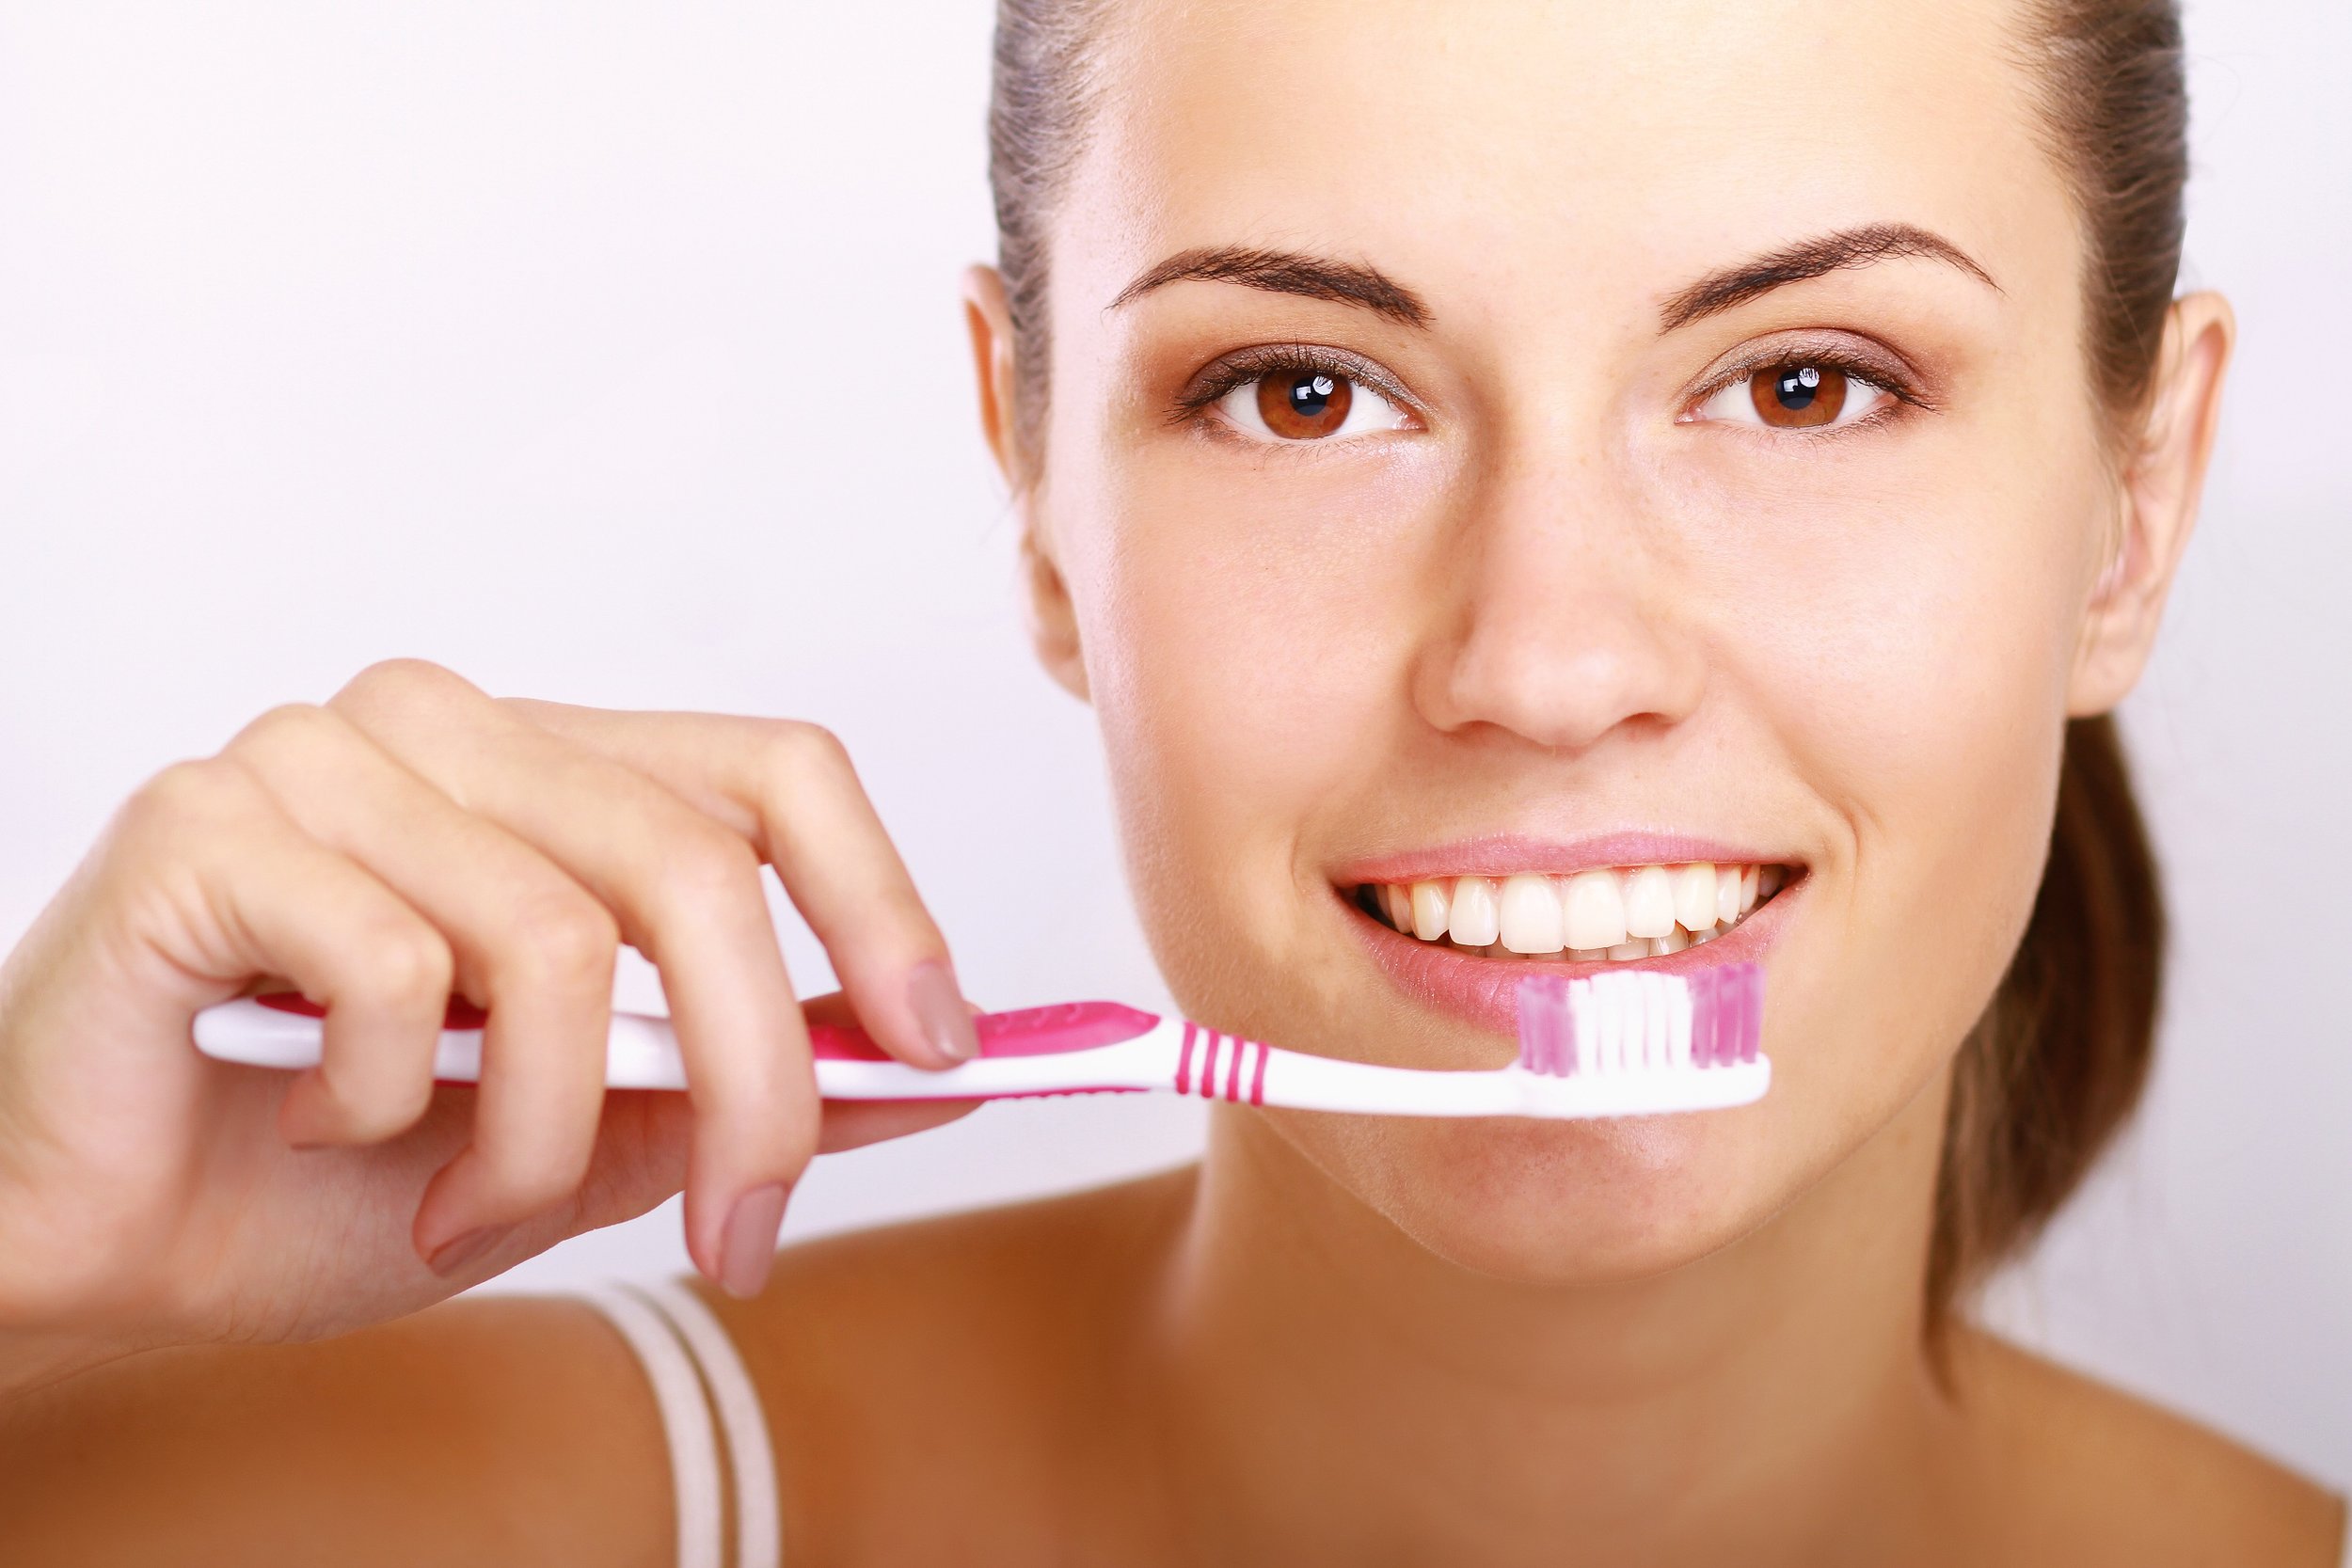 pivinski woman toothbrush.jpg